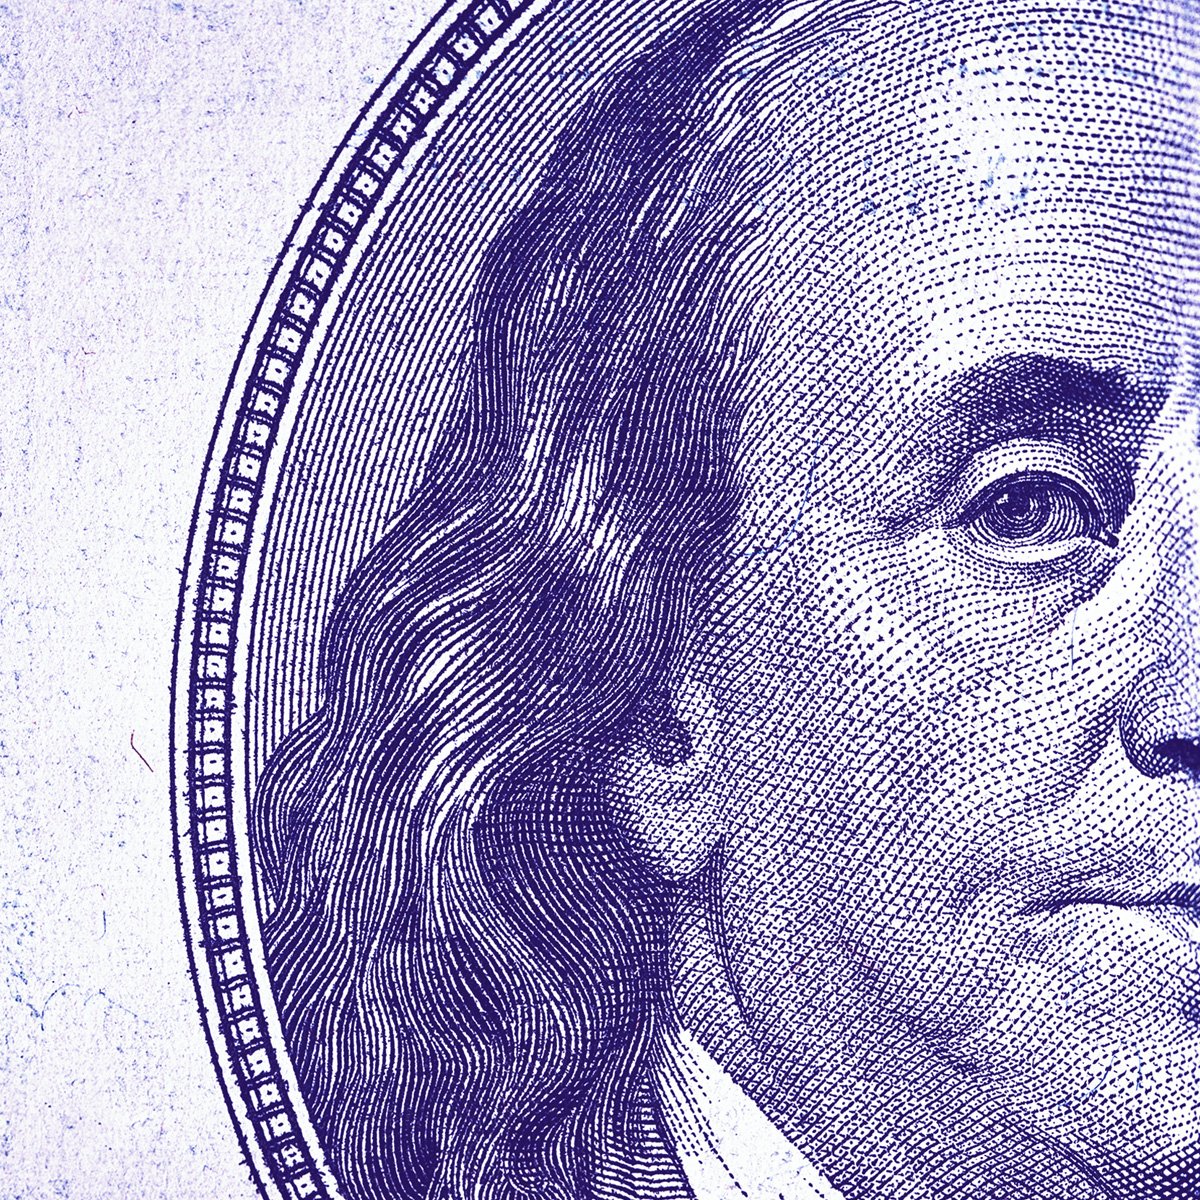 closeup image of half of Benjamin Franklin's face